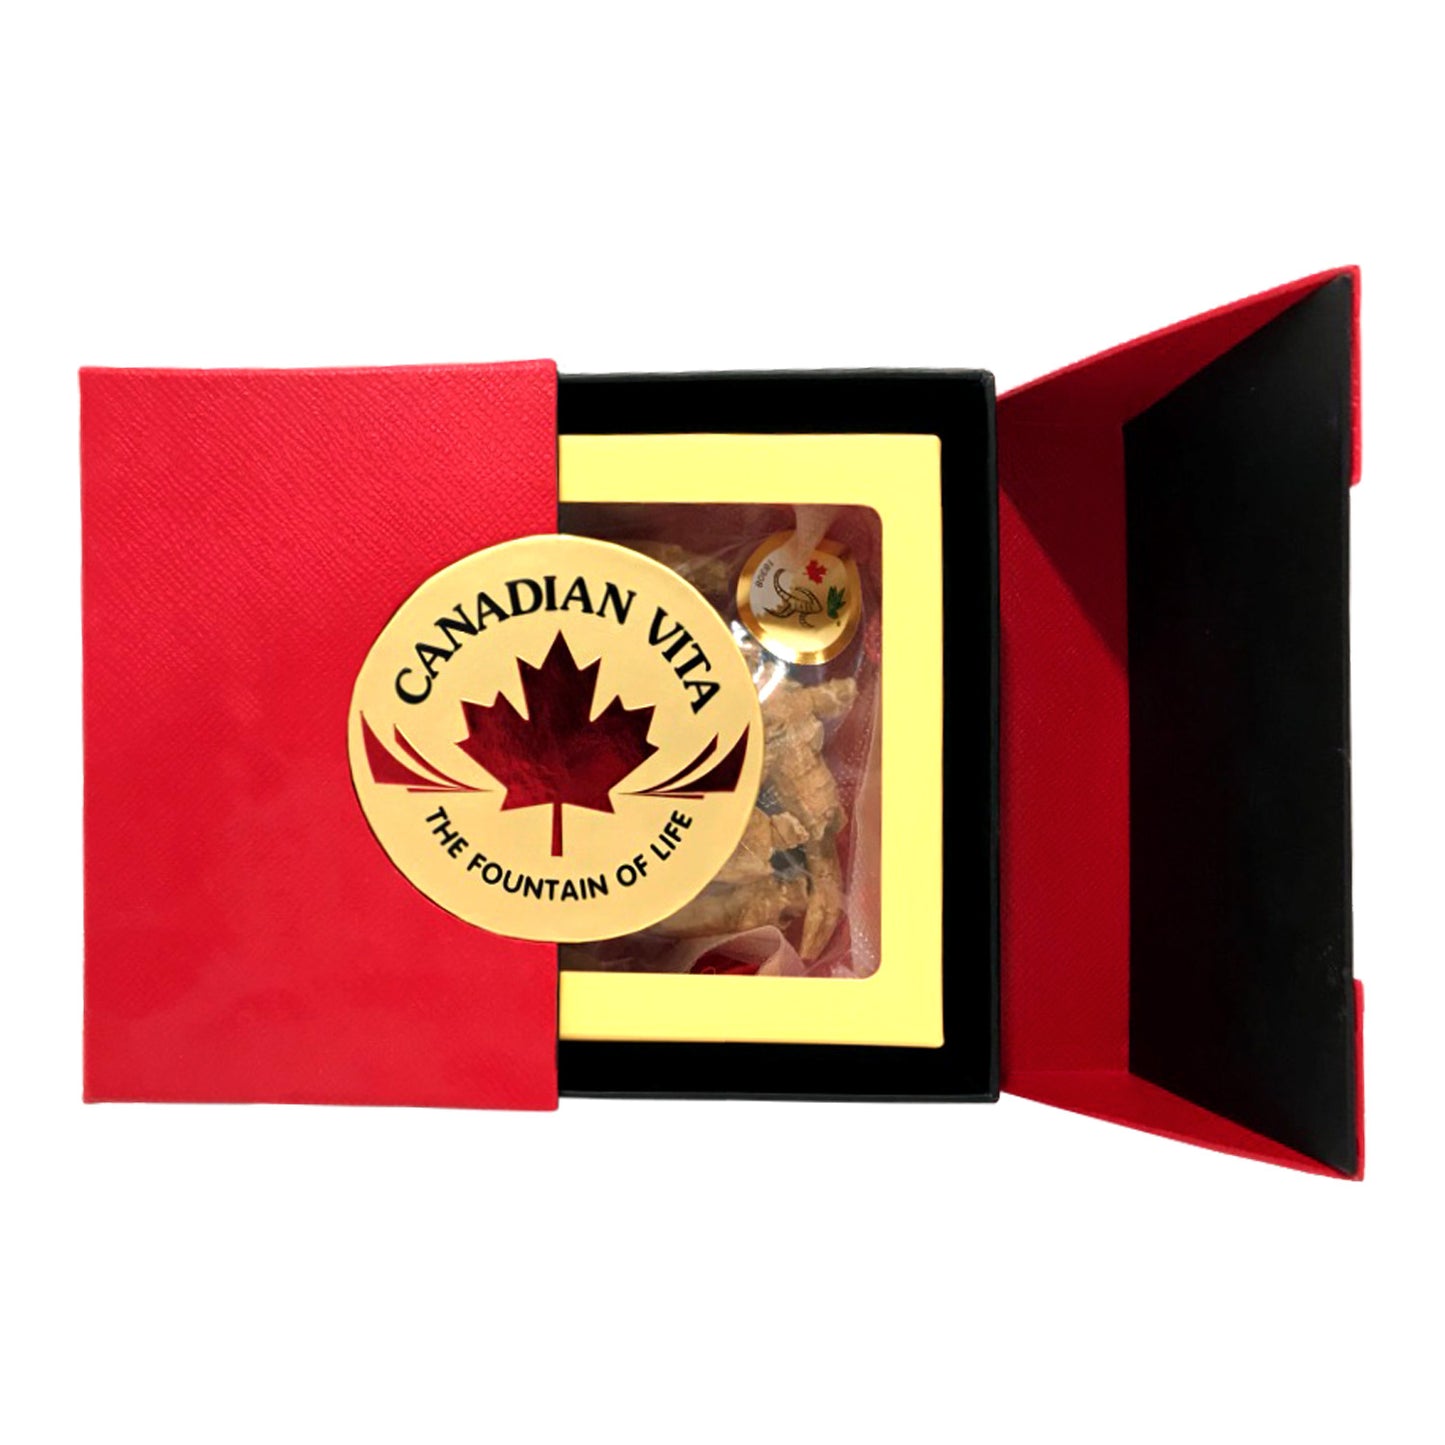 Canadian Vita Premium Ginseng Box (5 year - 200g)